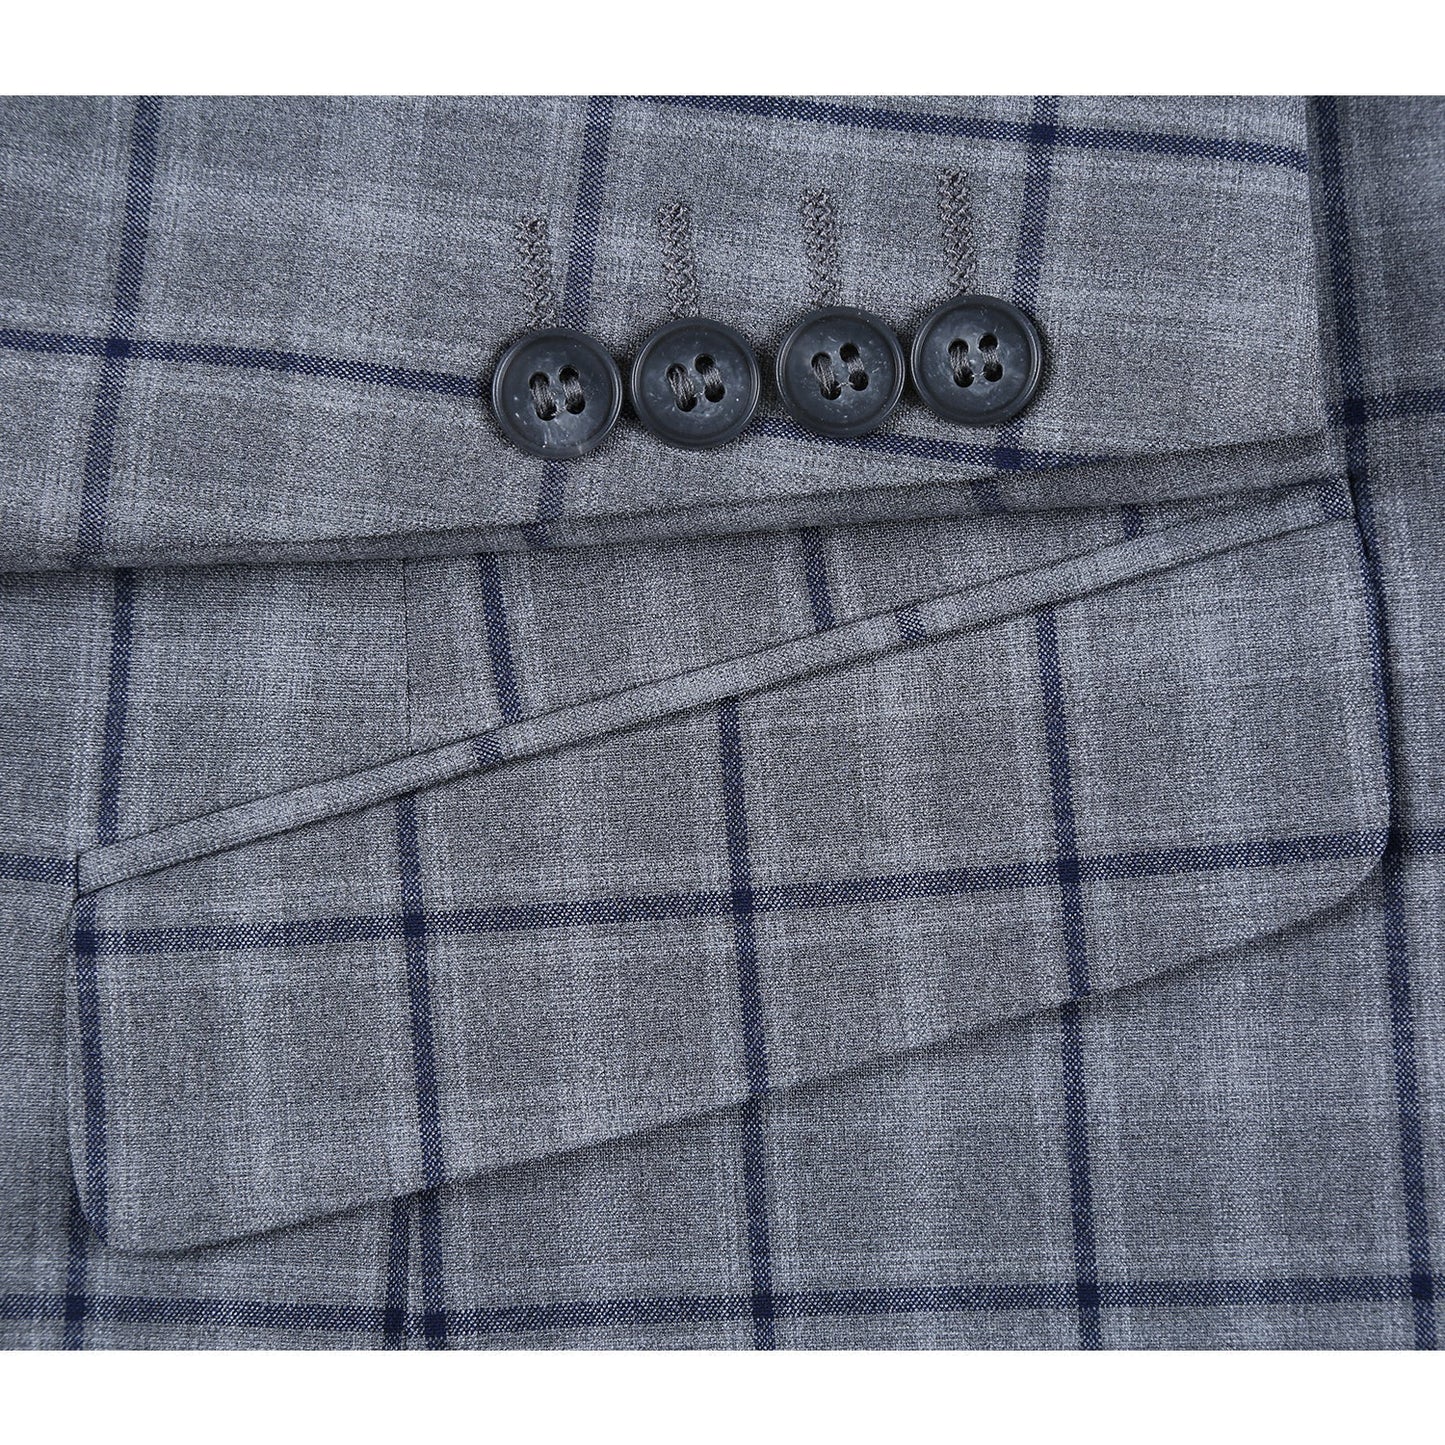 293-20 Men's Grey and Blue Windowpane Slim Fit Suit